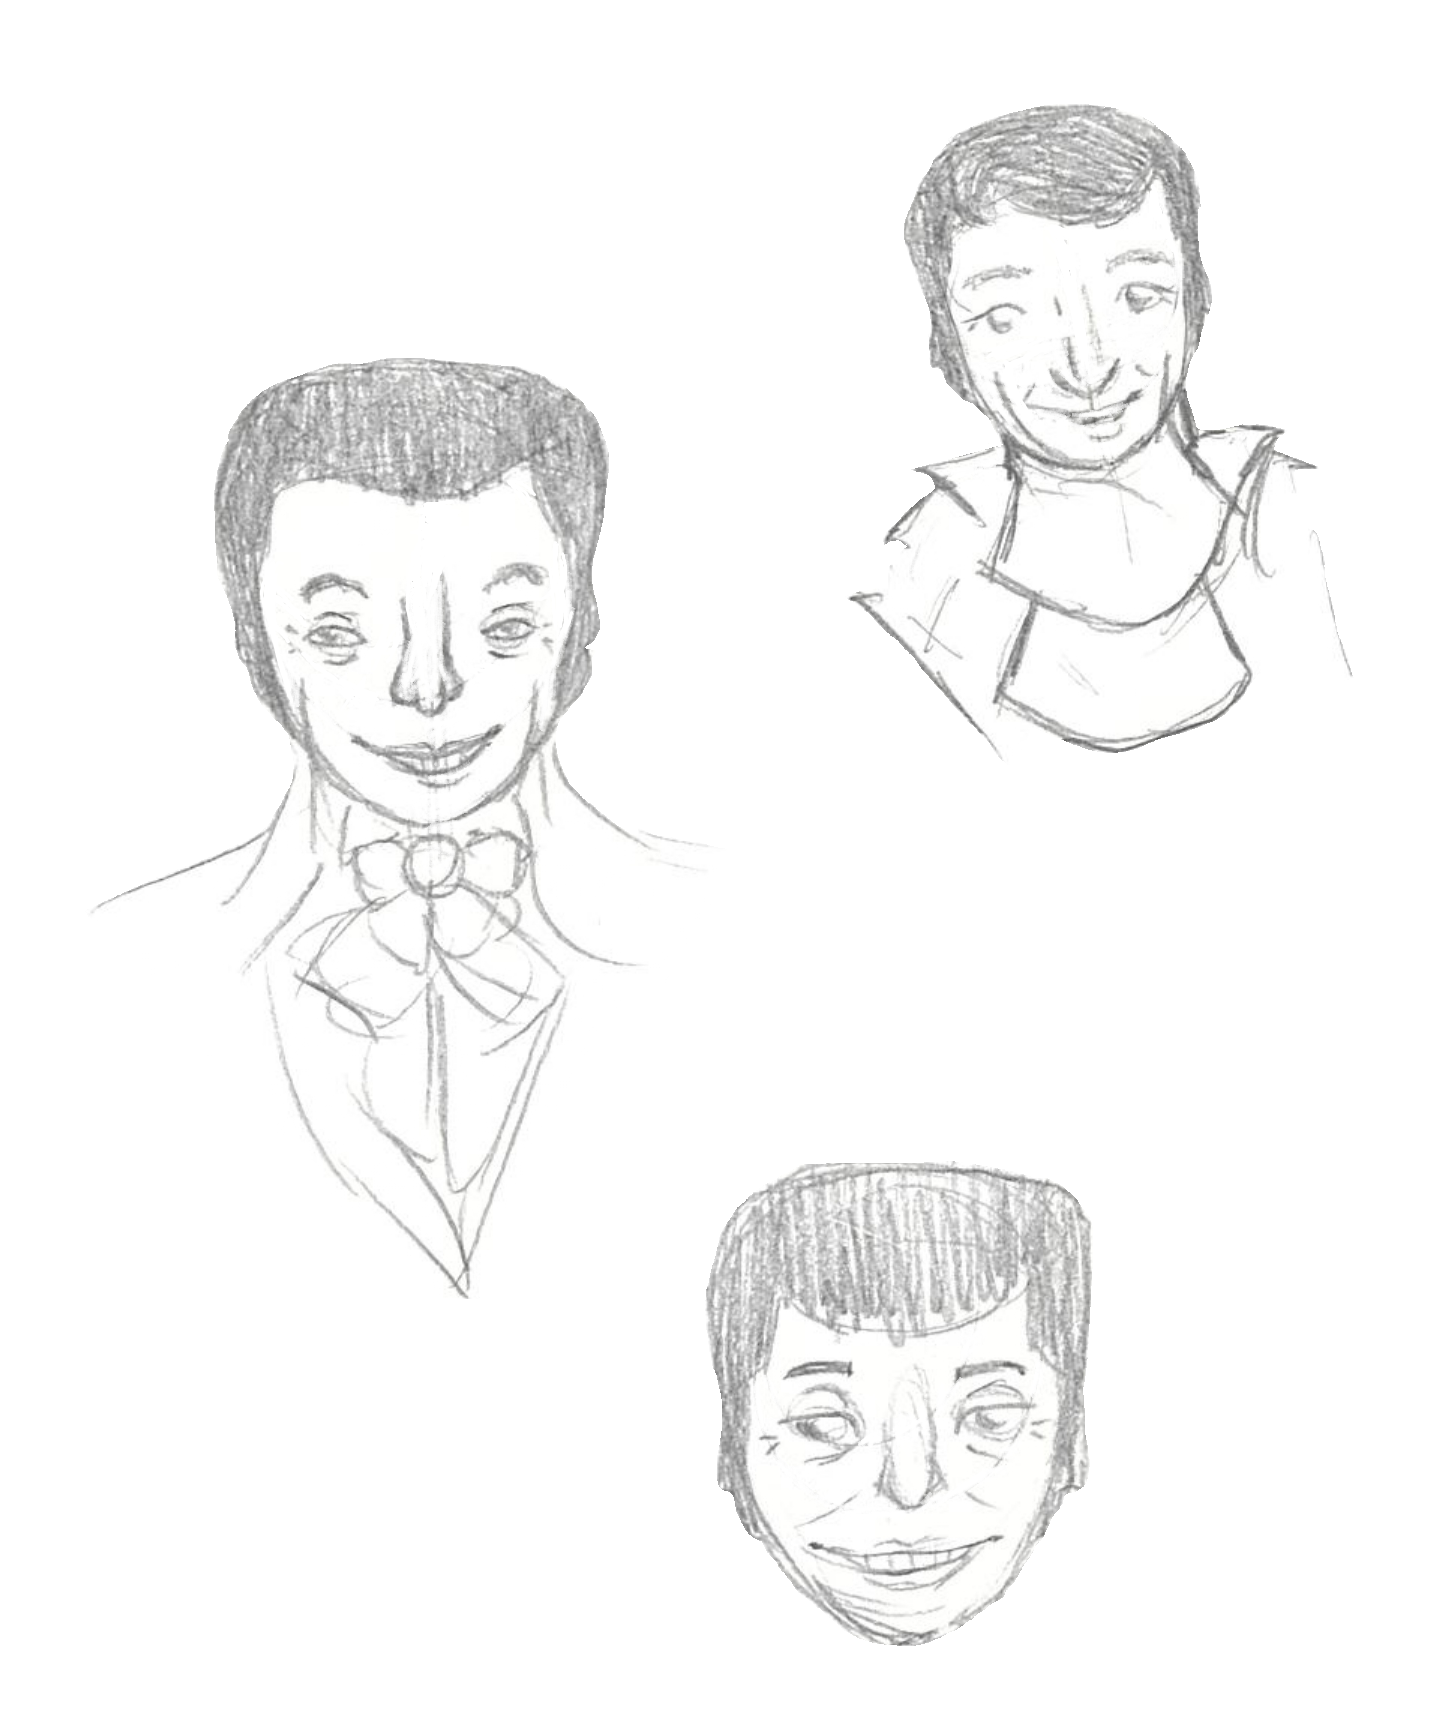 Three drawings of Liberace